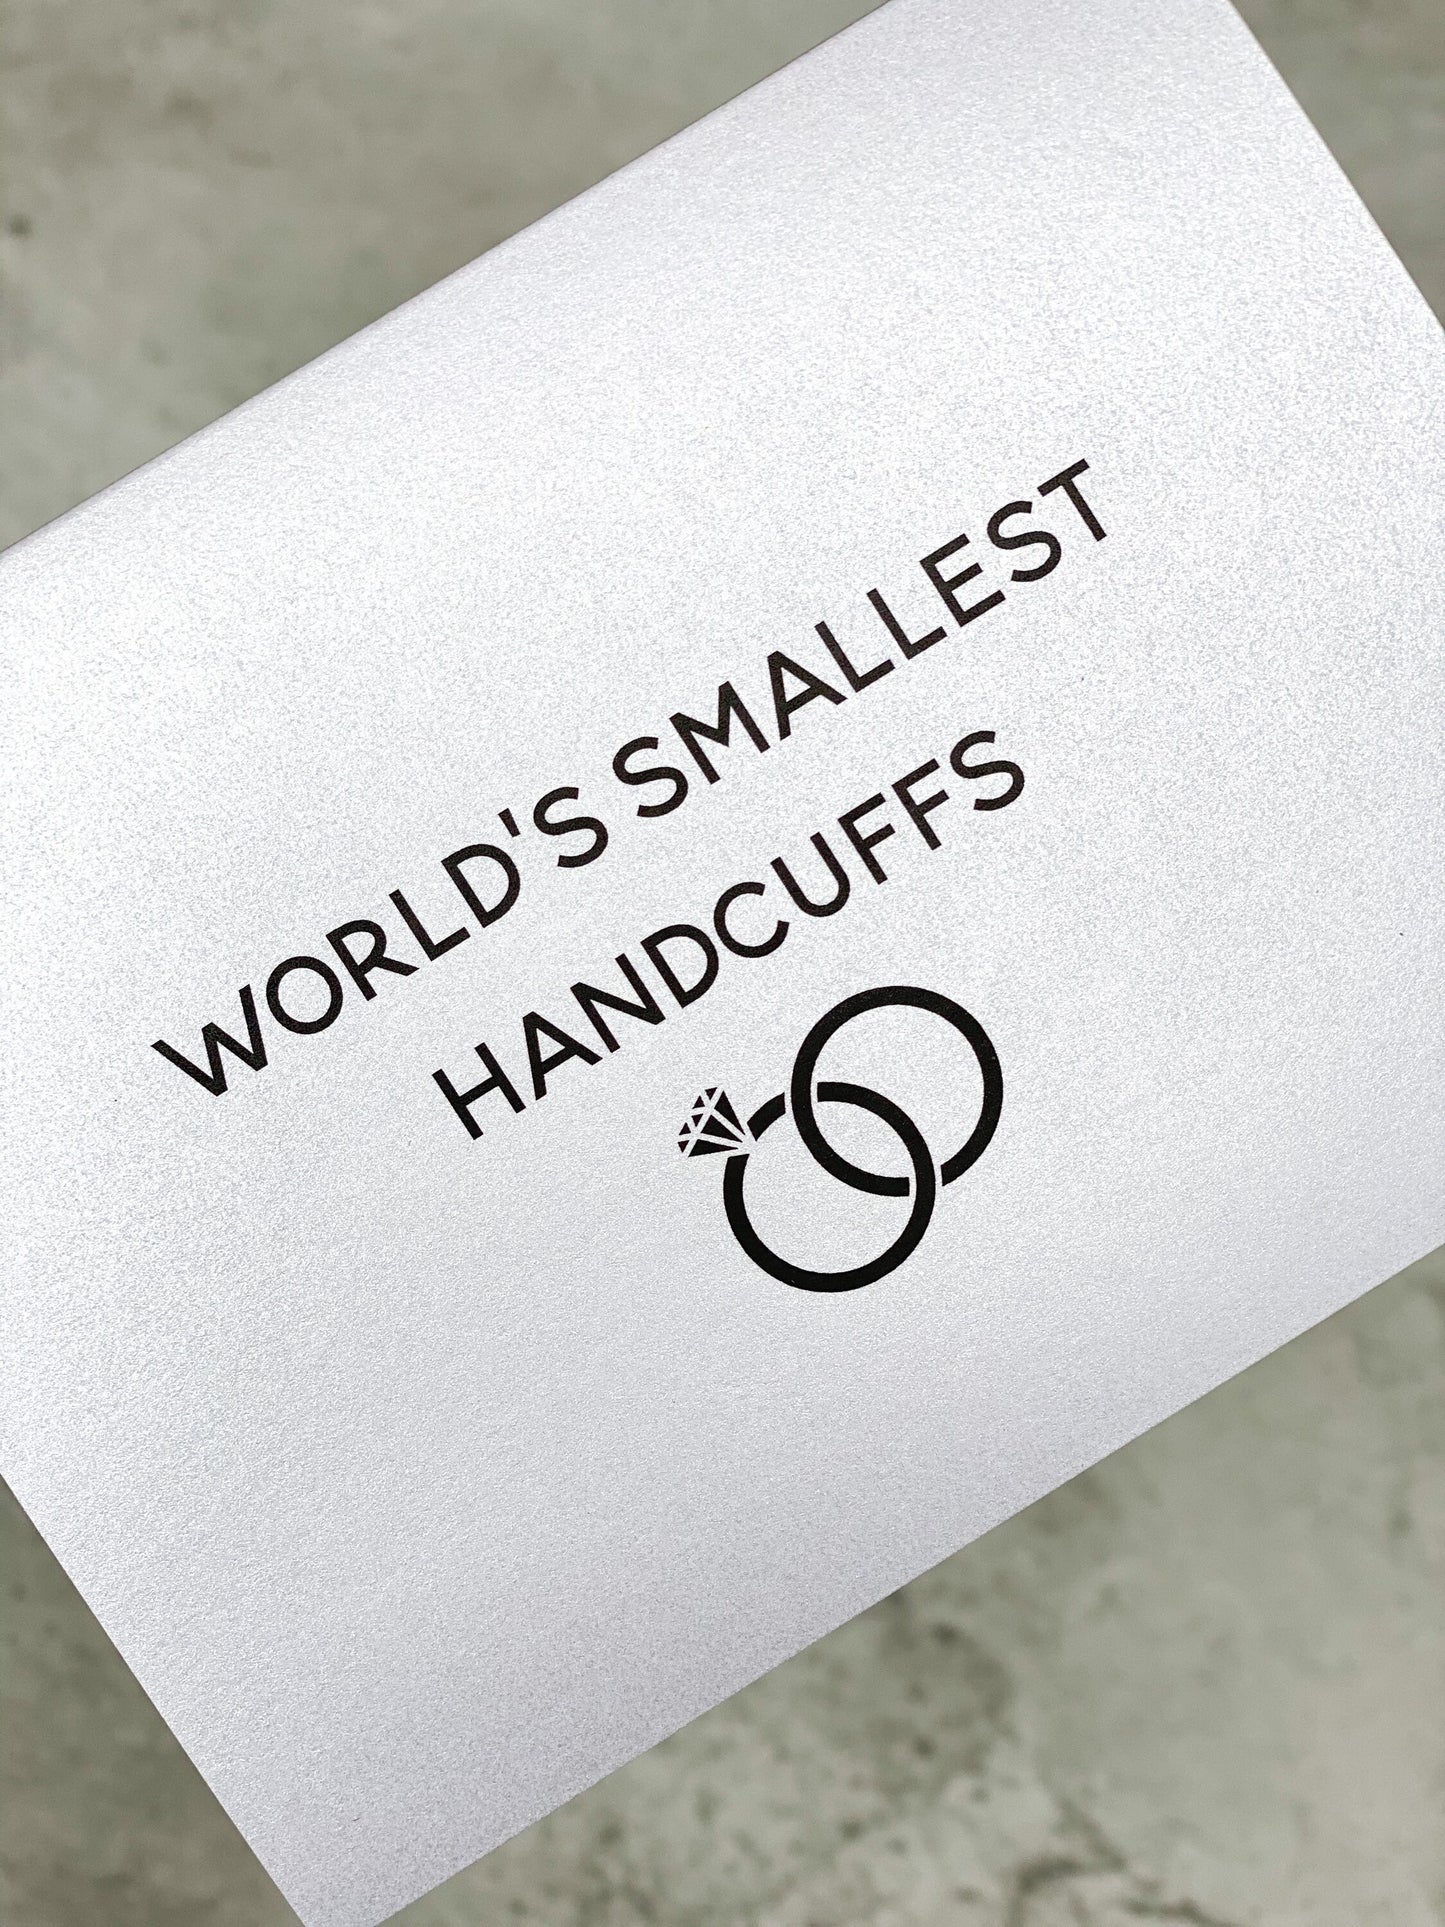 World’s smallest handcuffs card